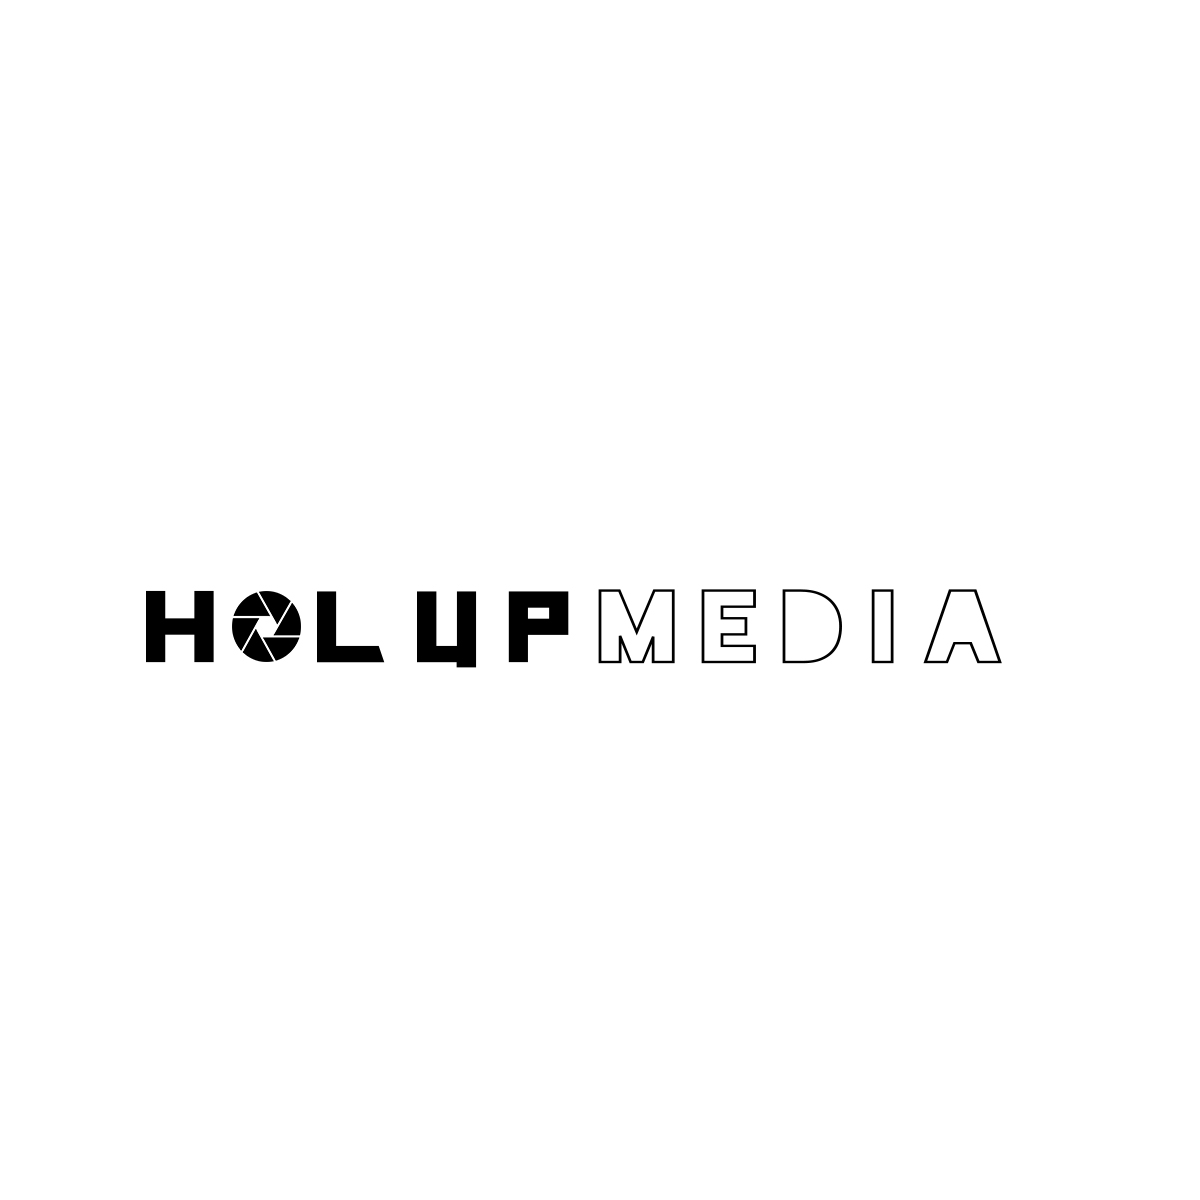 holup media logo profile pic.jpg